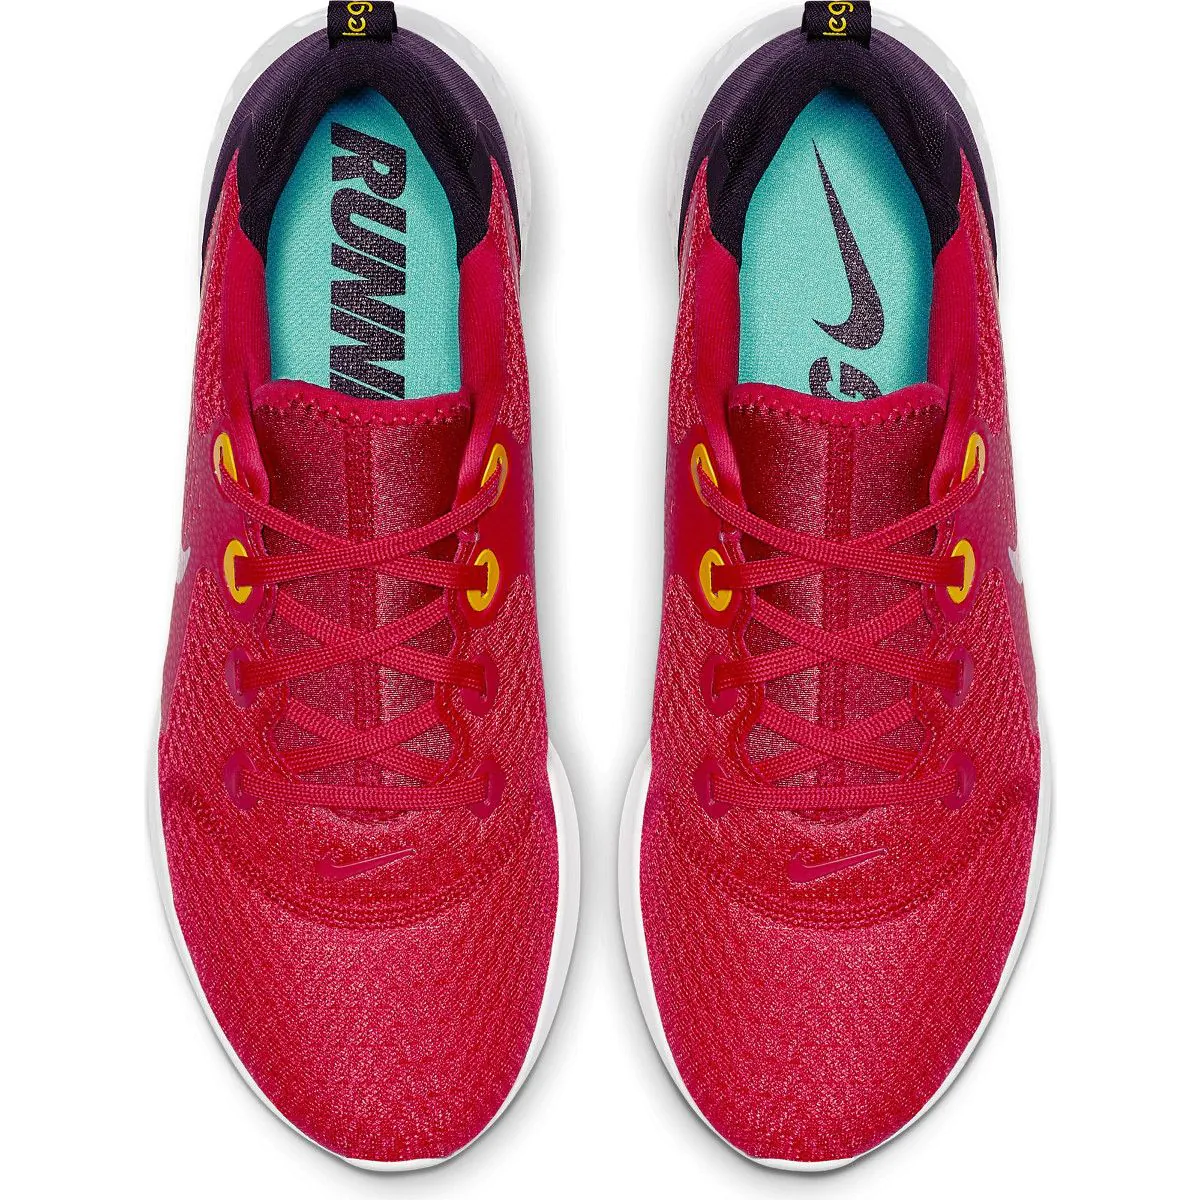 Nike Rebel React Men's Running Shoes AA1625-601